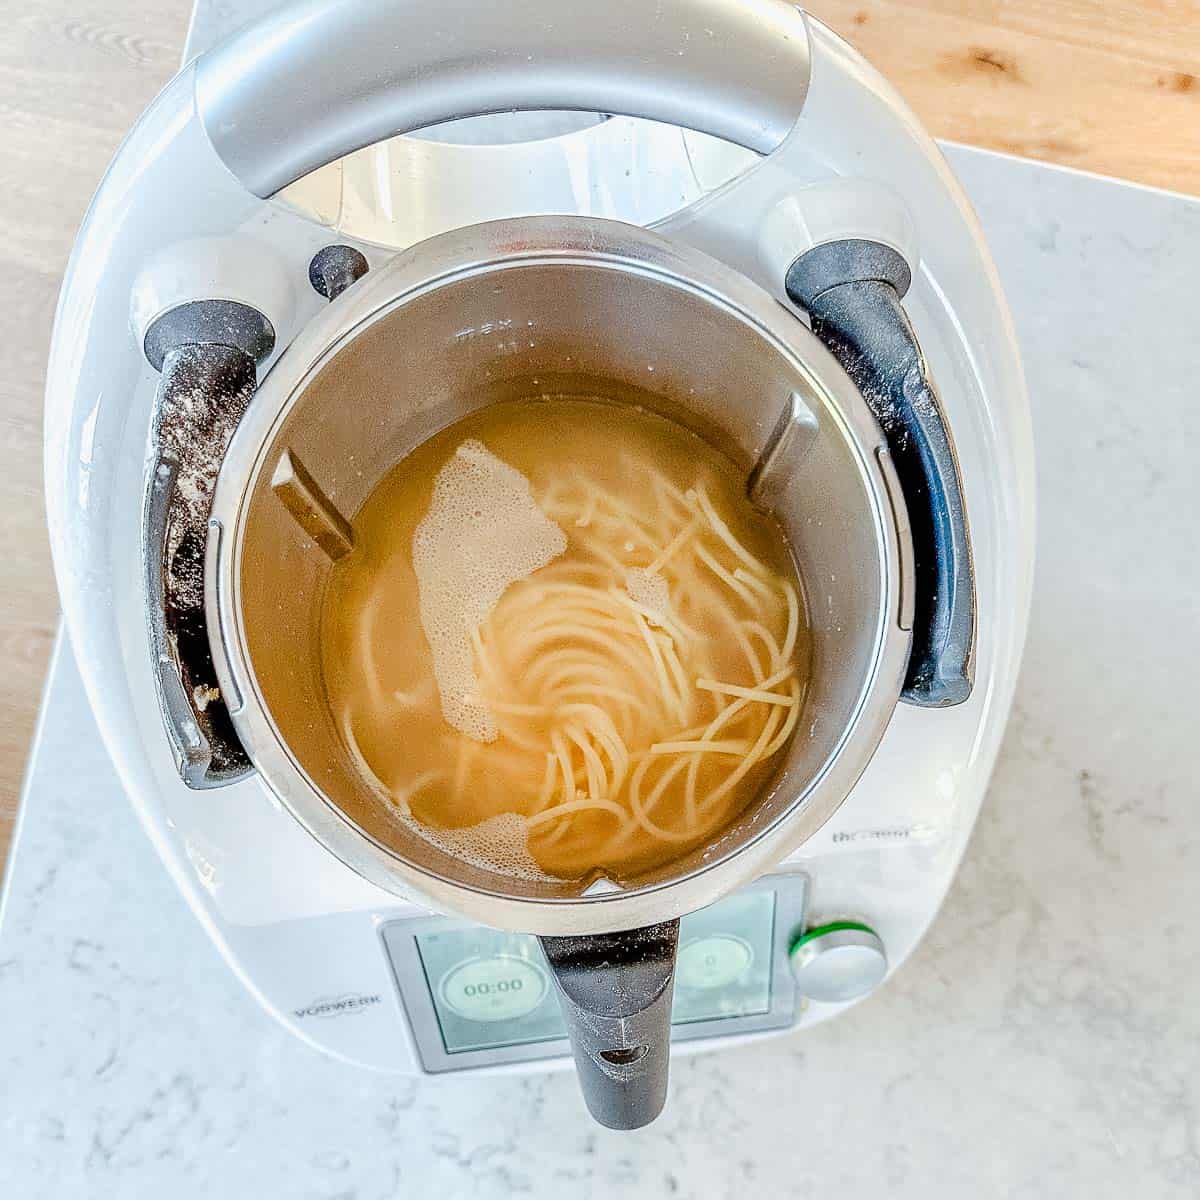 Spaghetti in a thermomix bowl.